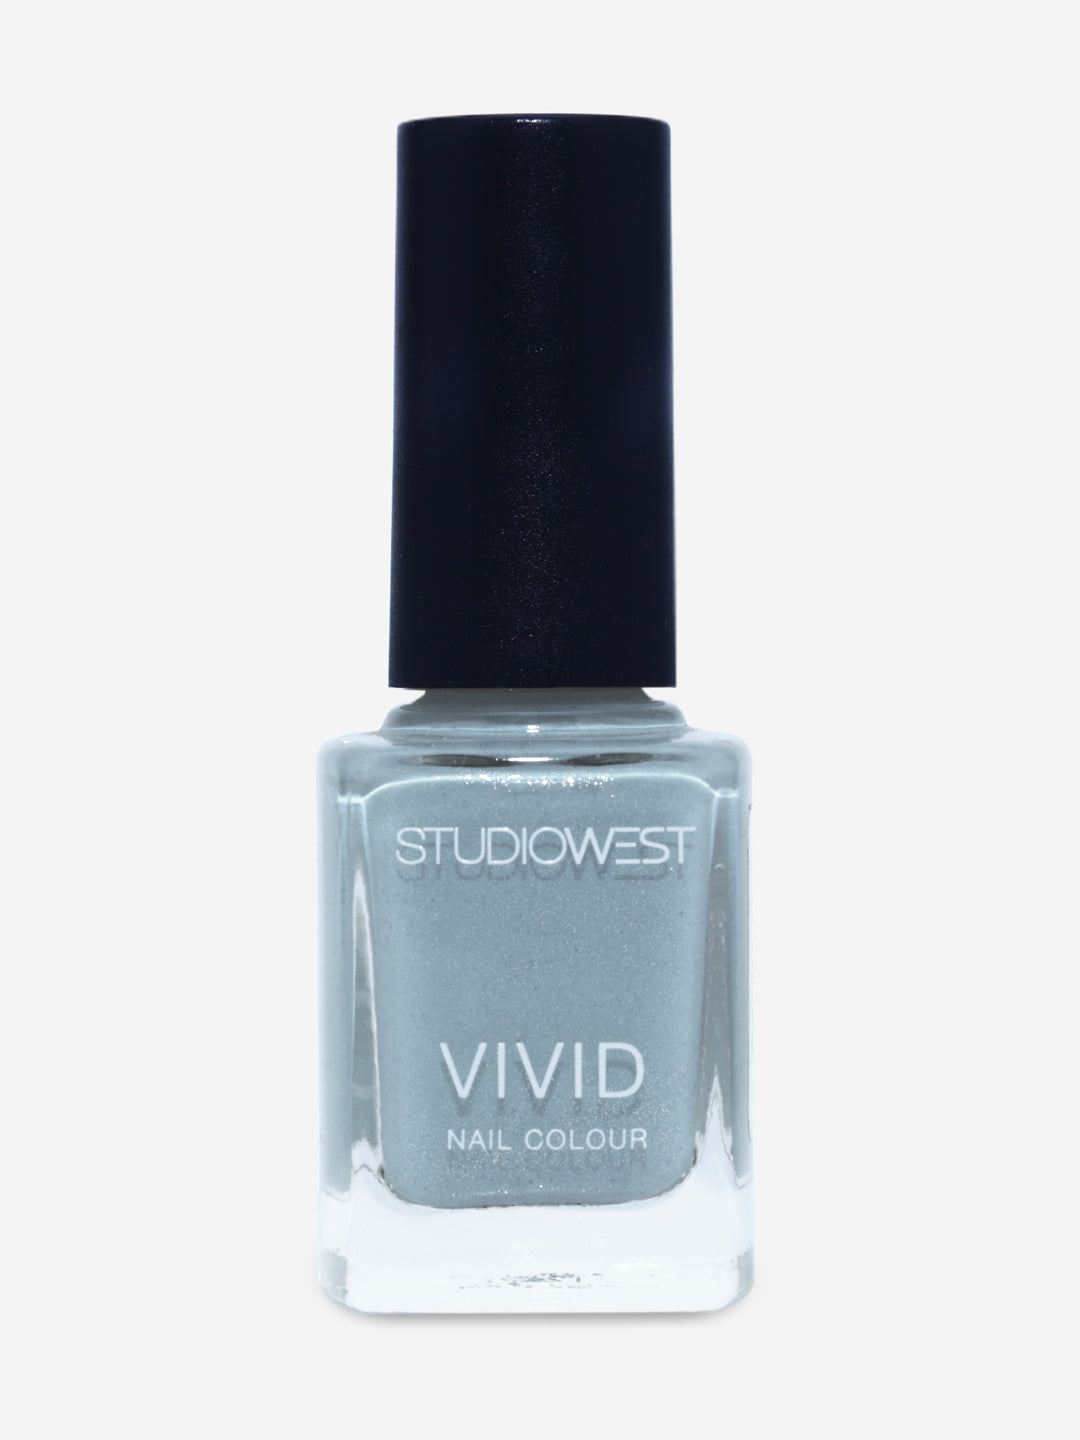 Studiowest Vivid Nail Colour Denim-04 - 9 ml